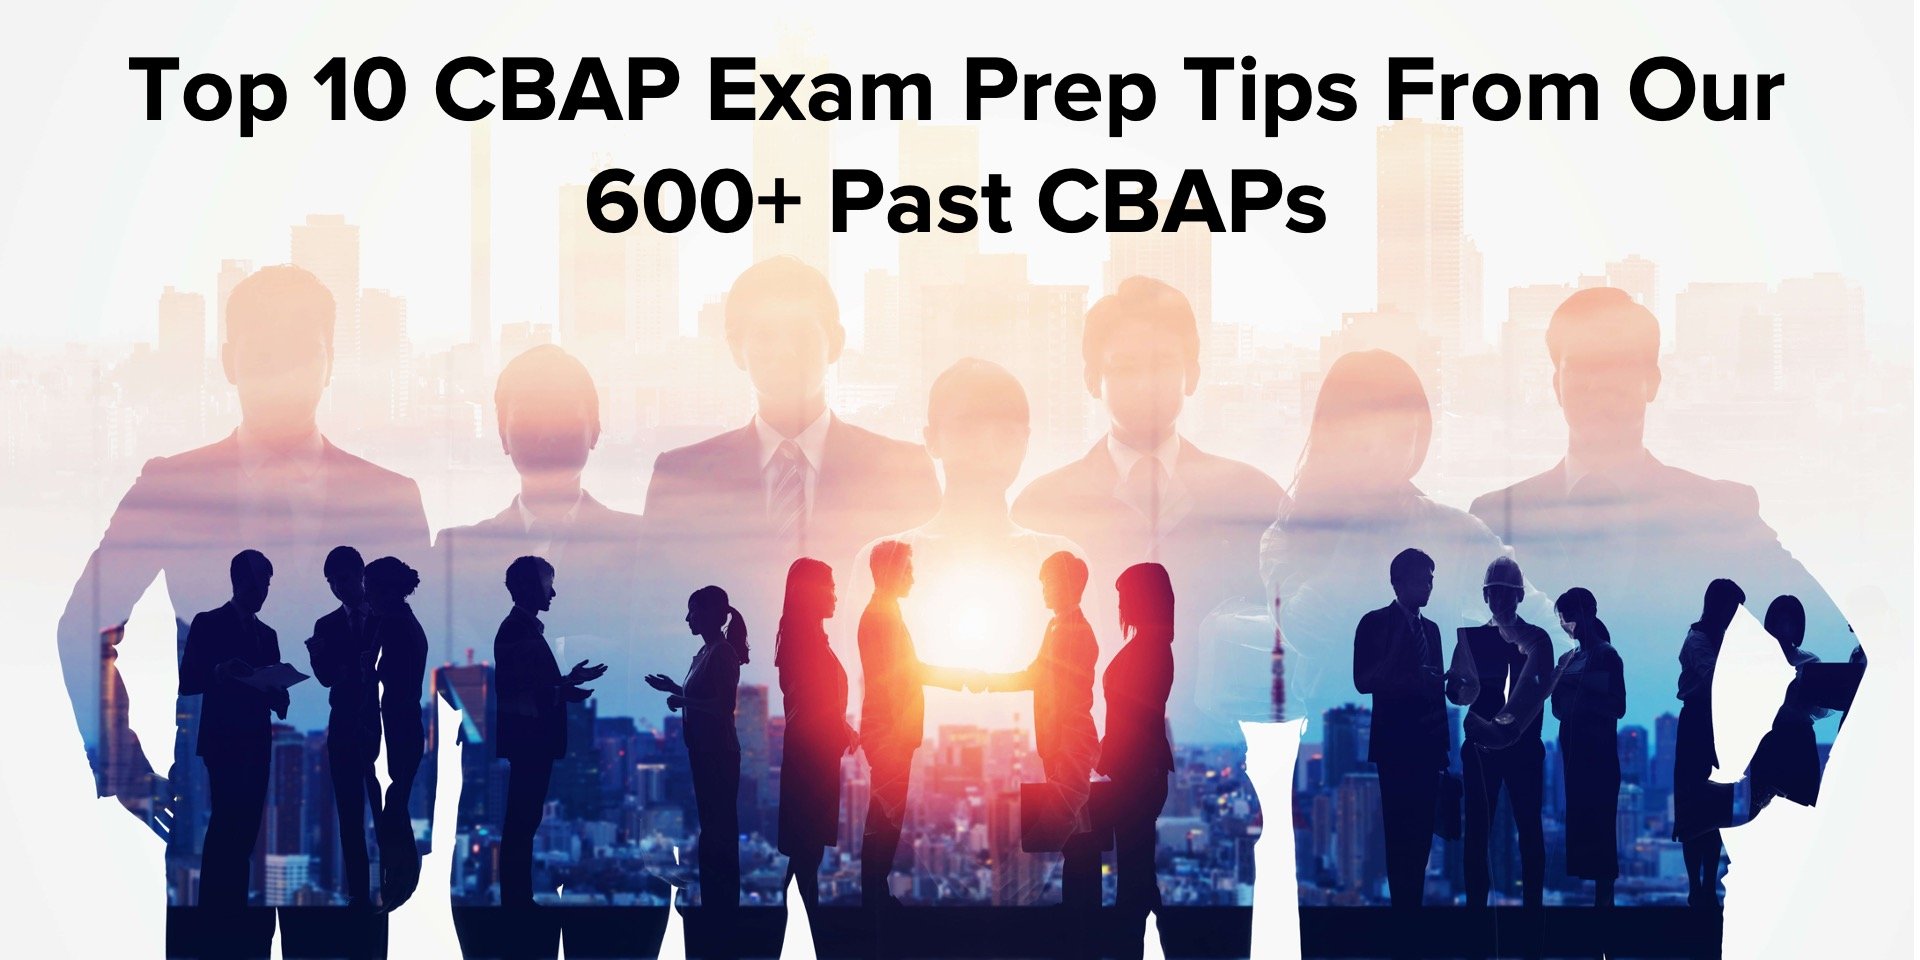 CBAP Exam Prep tips